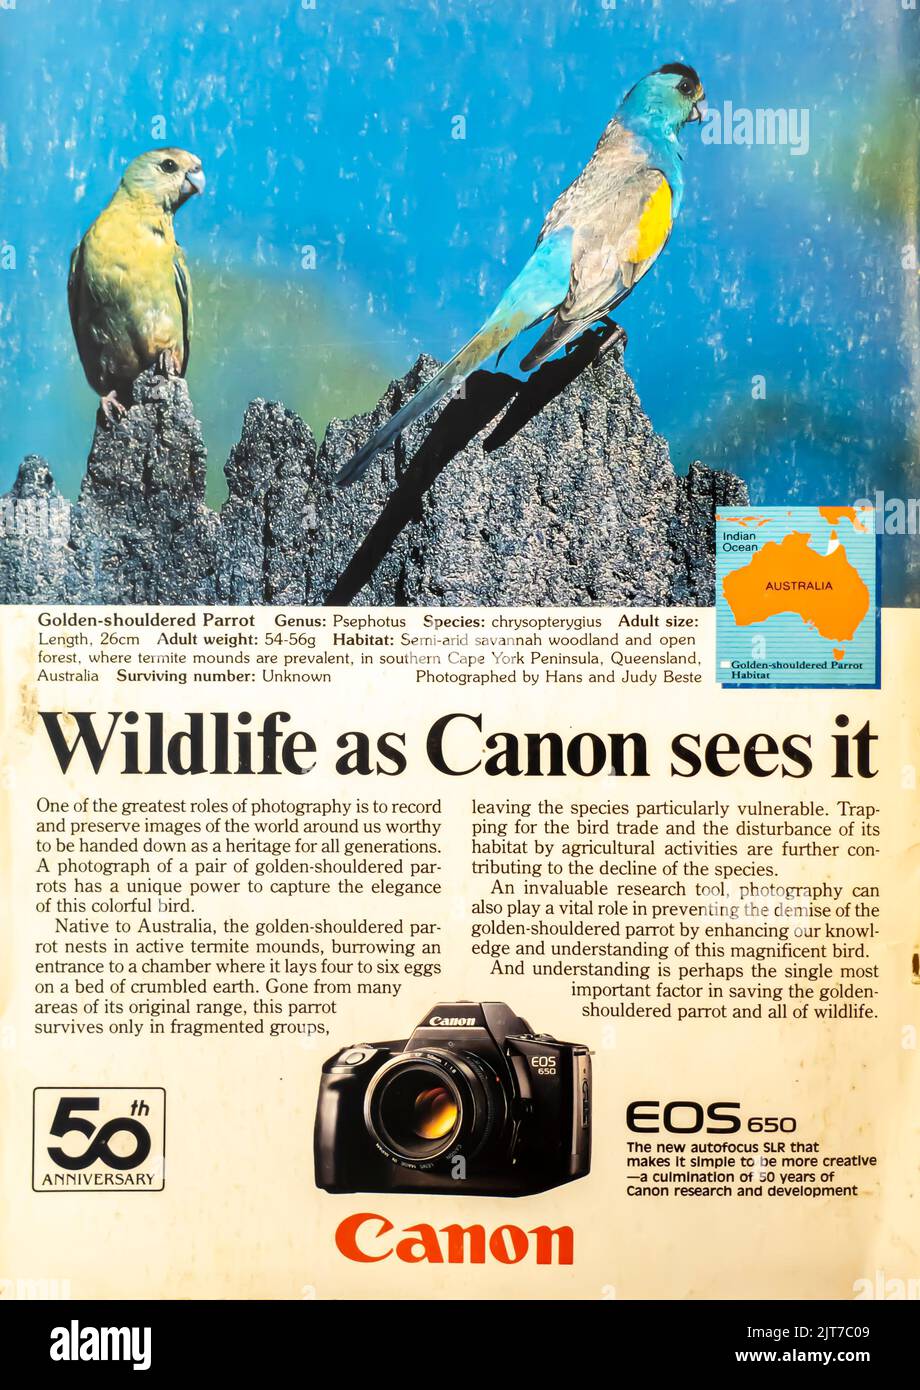 Canon EOS 650 photo camera advertisement placed inside a NatGeo magazine, April 1987 Stock Photo